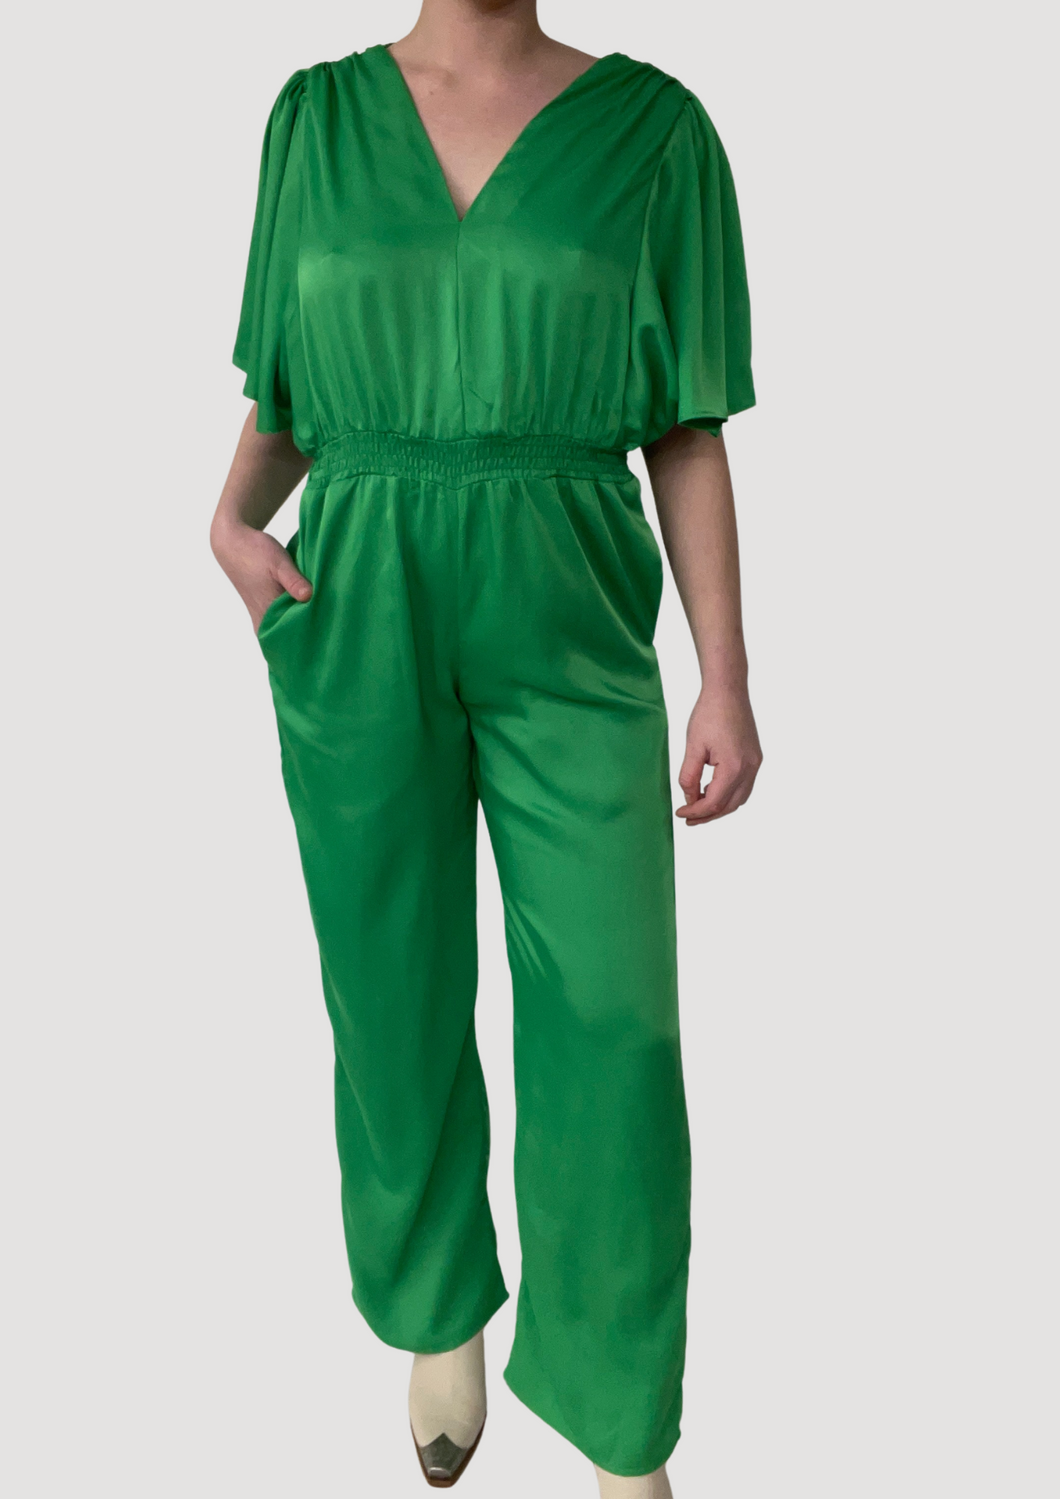 Green jumpsuit